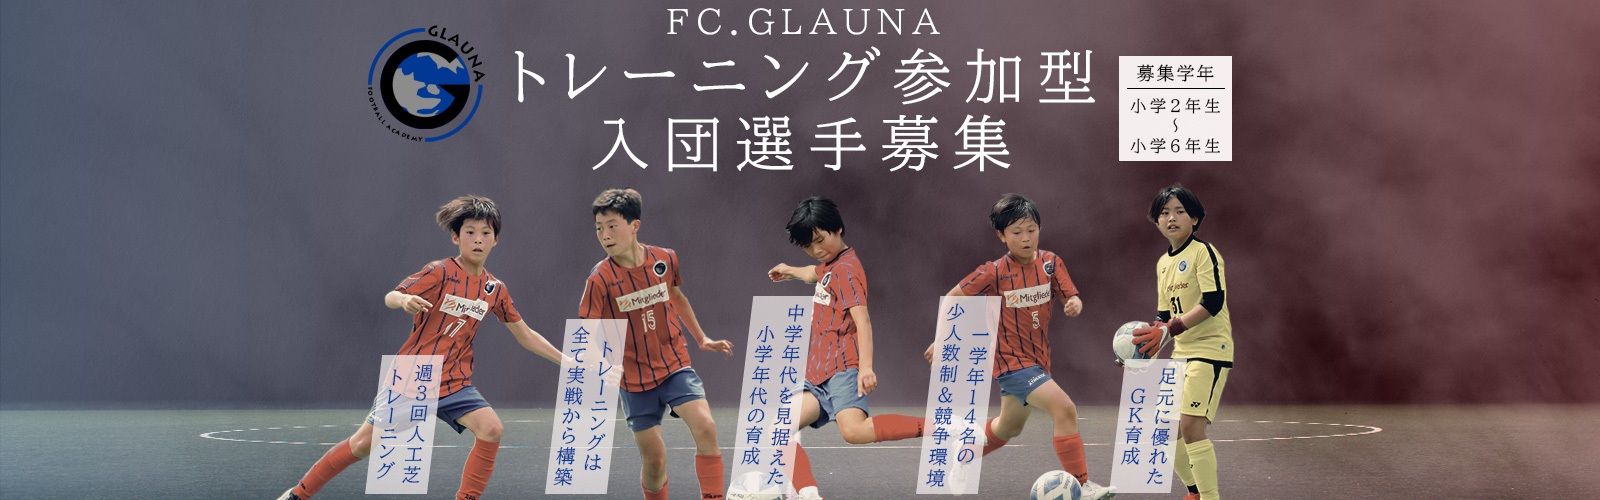 FC.GLAUNAトレーニング参加型、入団選手募集。対象は、小学2年生〜6年生まで。8月2日まで